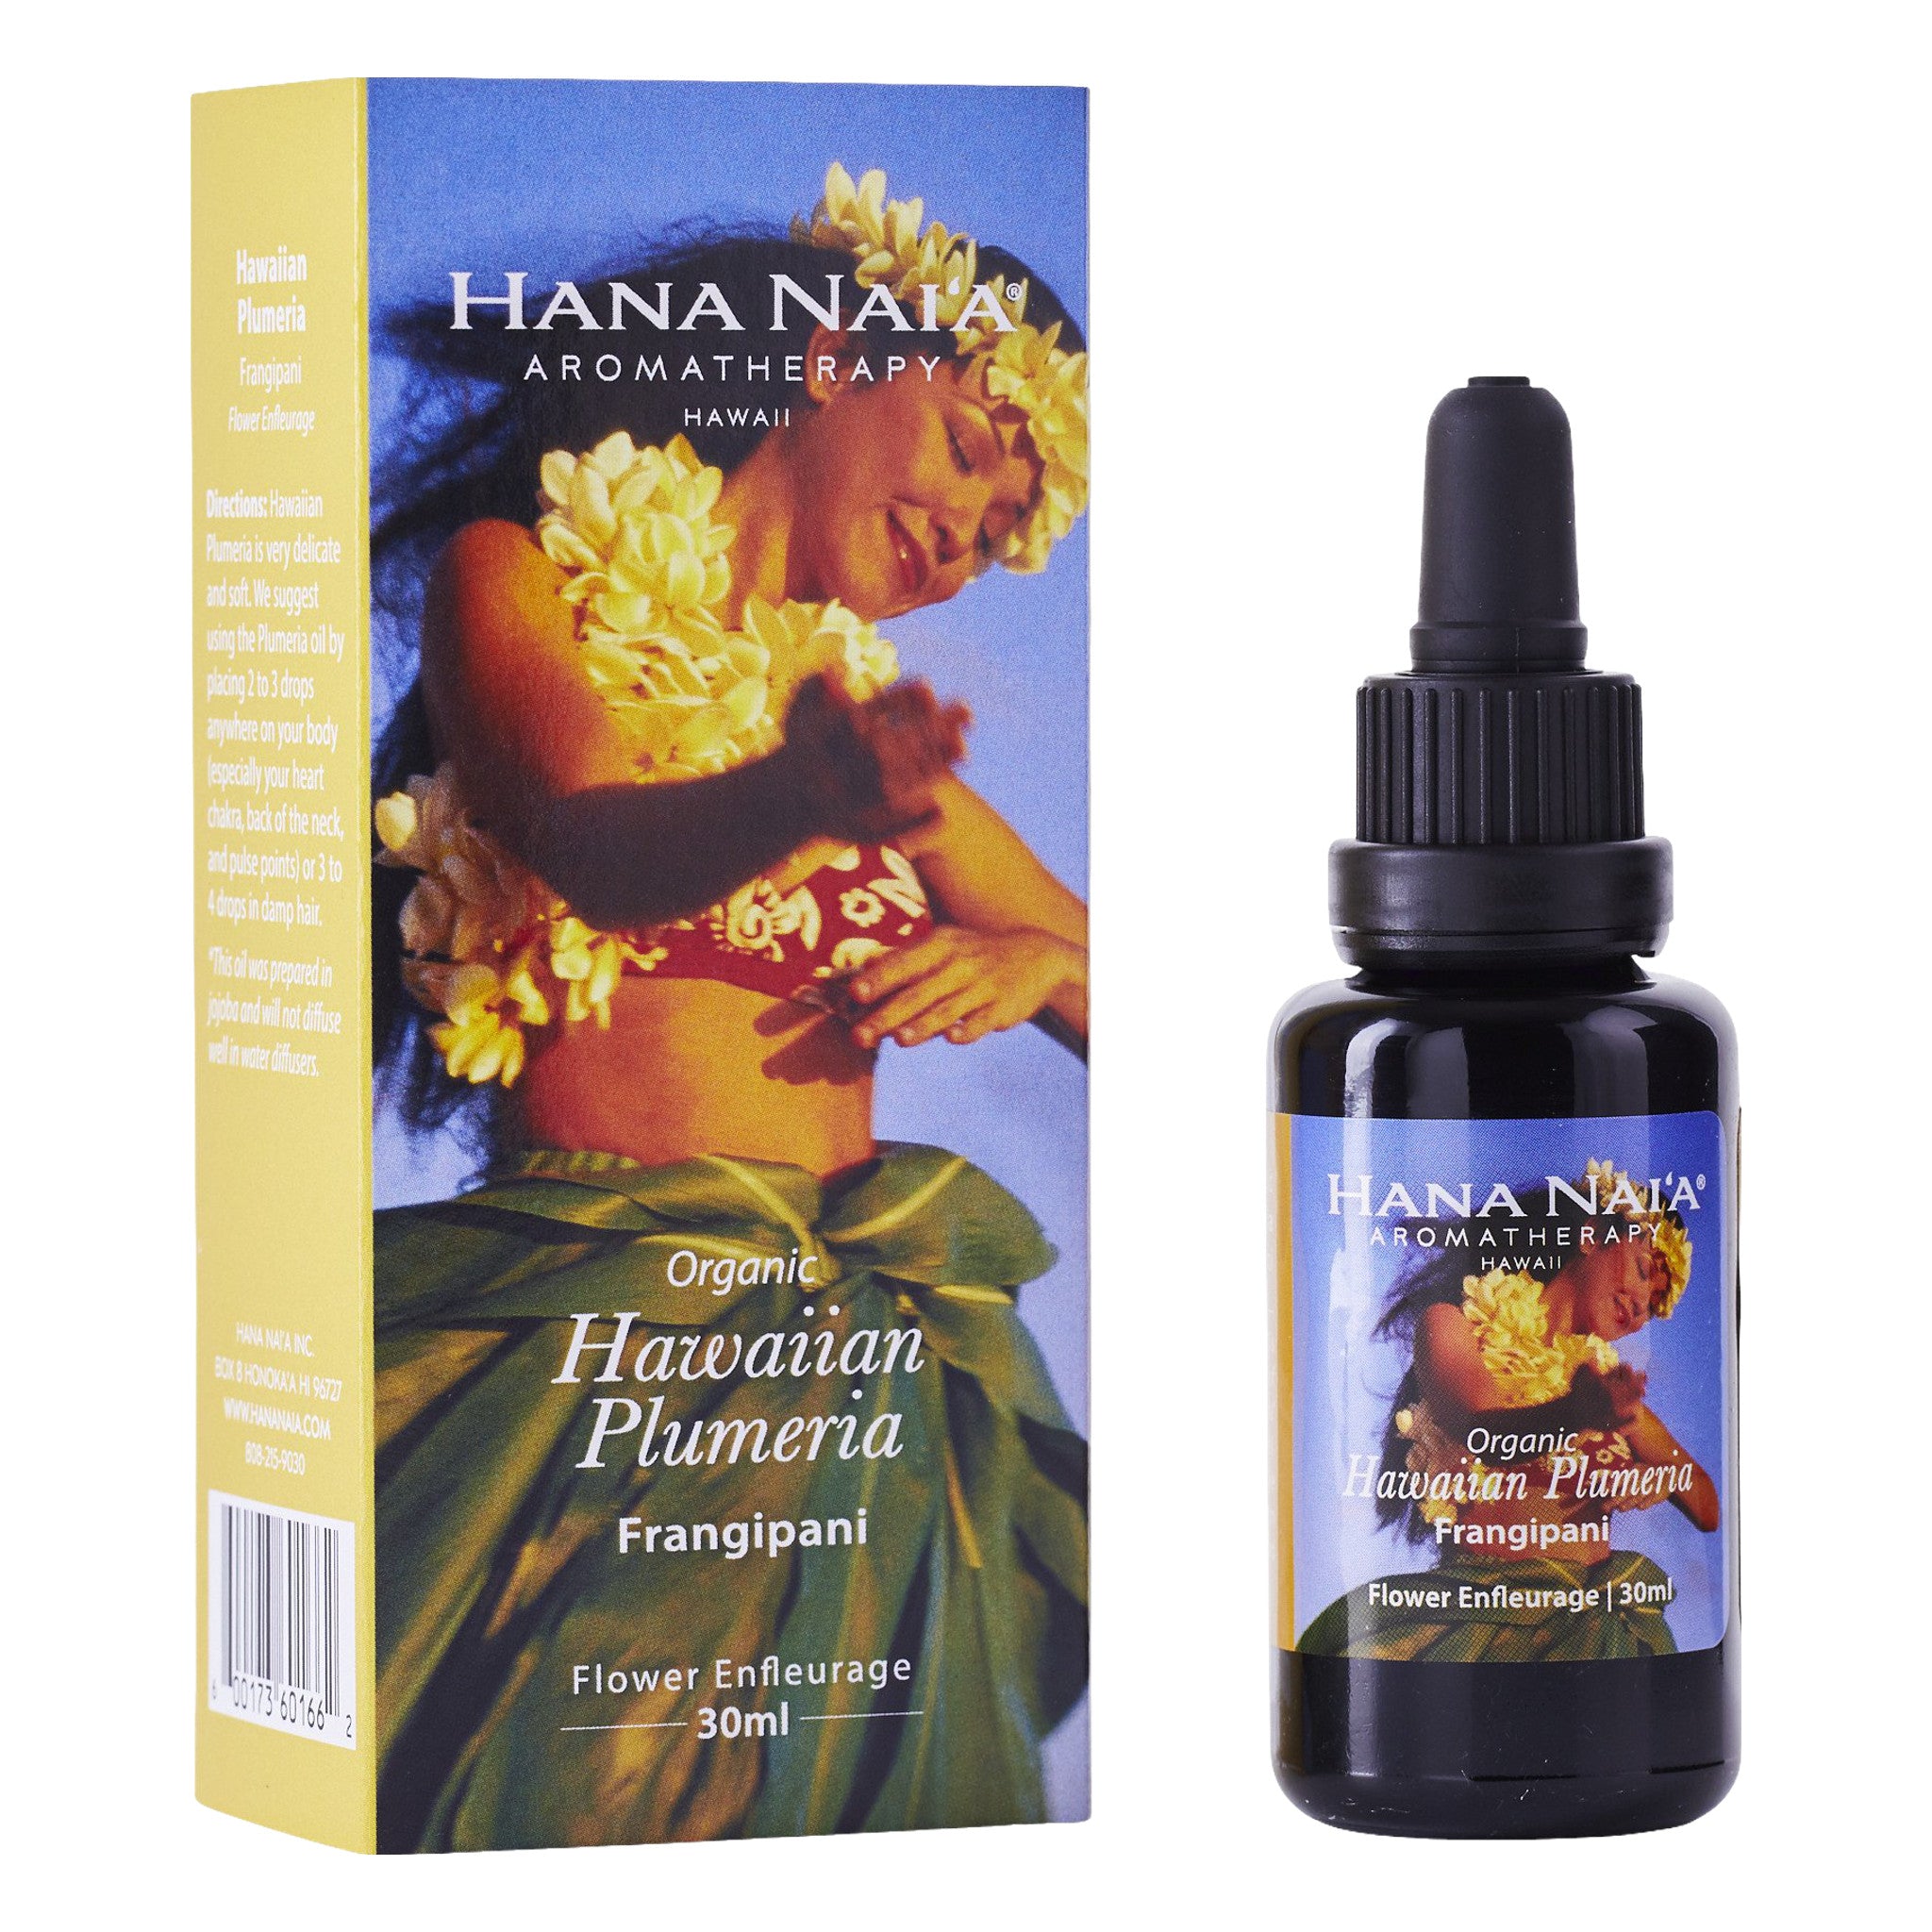 Organic Hawaiian Plumeria Enfleurage Oil from Maui — Hana Nai'a  Aromatherapy Hawaii